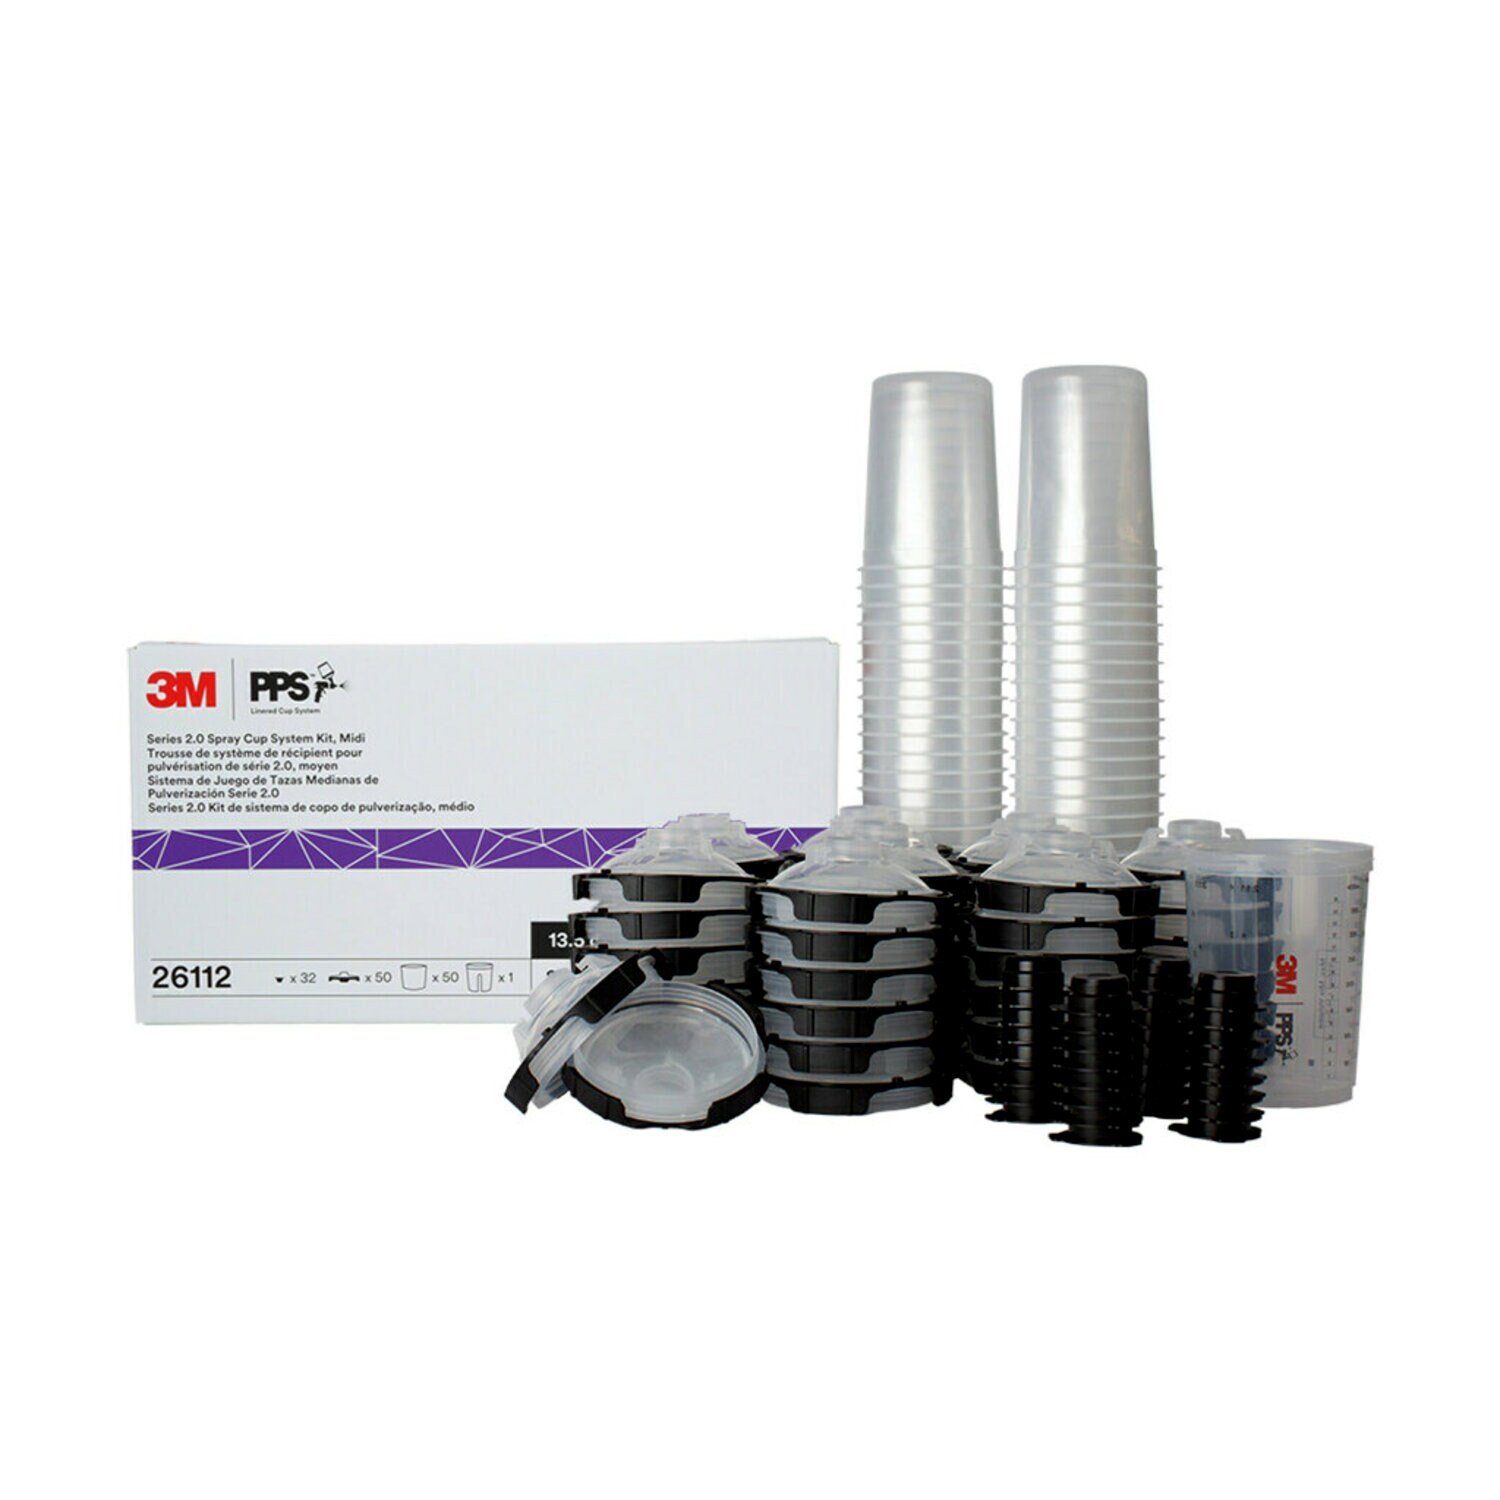 7100285373 - 3M PPS Series 2.0 Spray Cup System Kit, 26112, Midi (13.5 fl oz, 400
mL), 200 Micron Filter, 1 kit per case